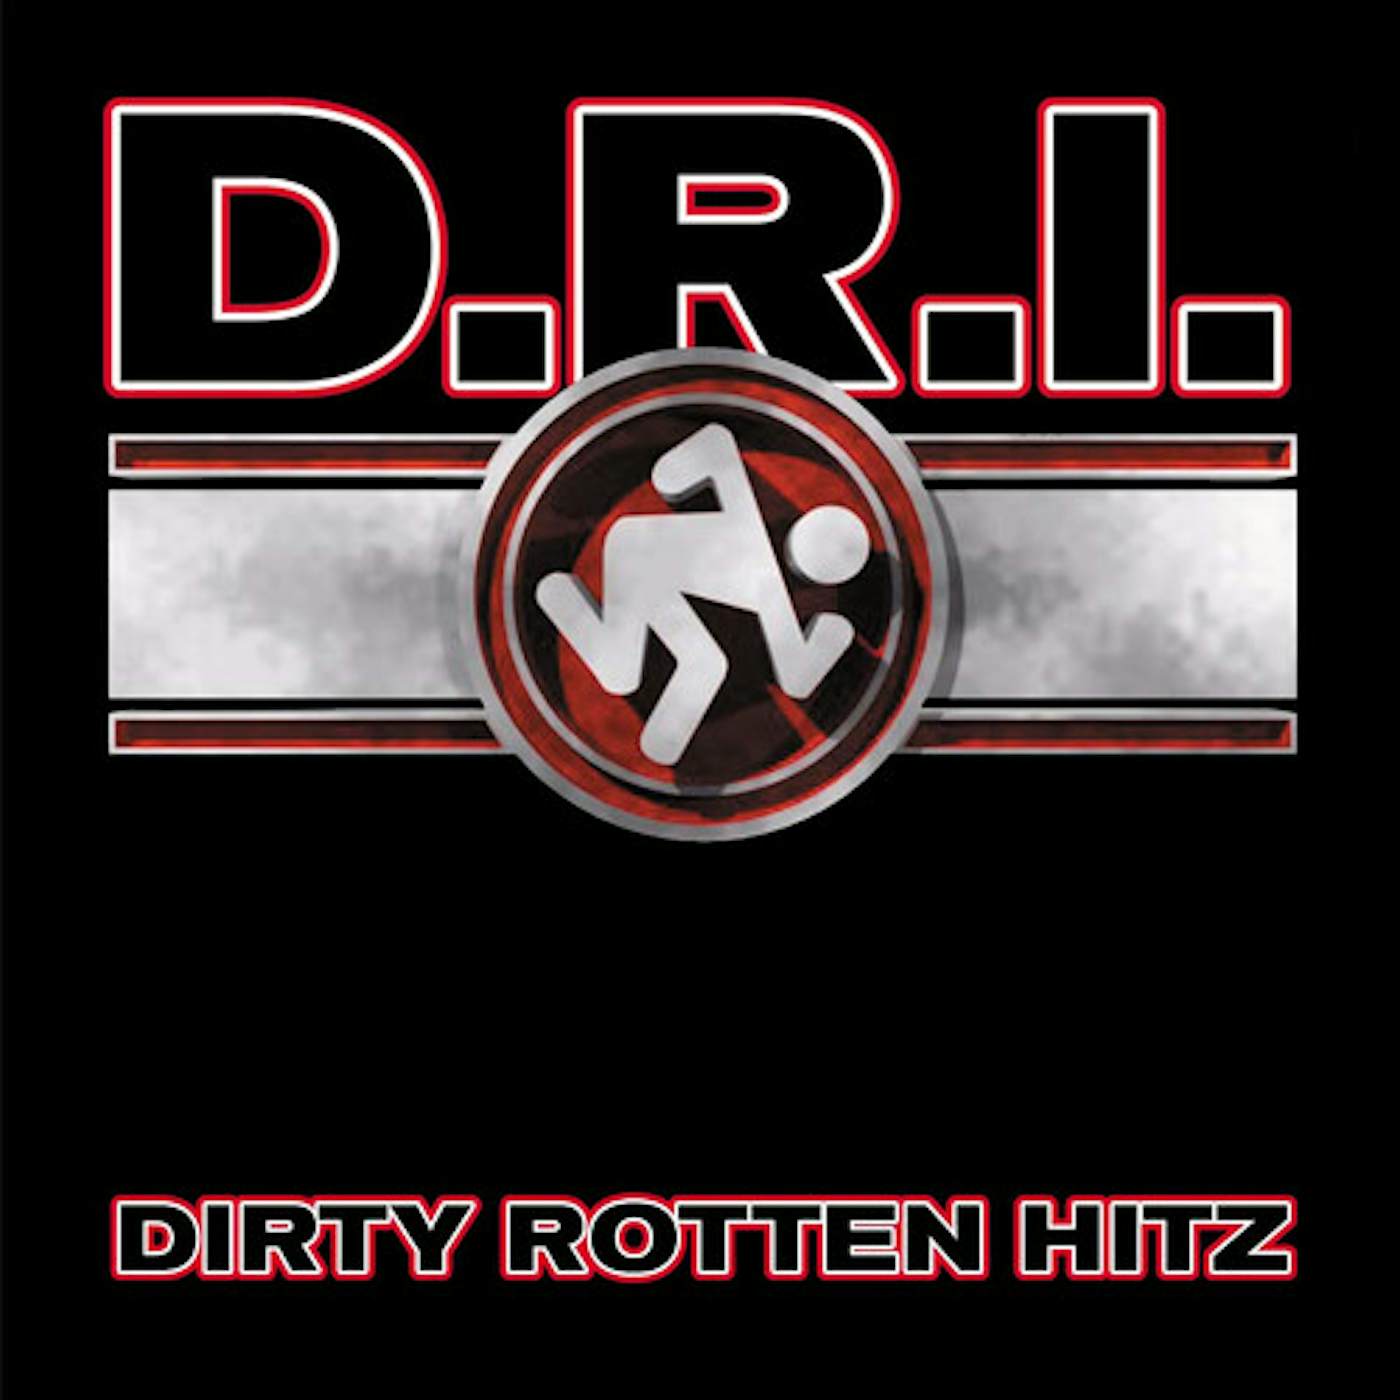 D.R.I. DIRTY ROTTEN HITZ CD